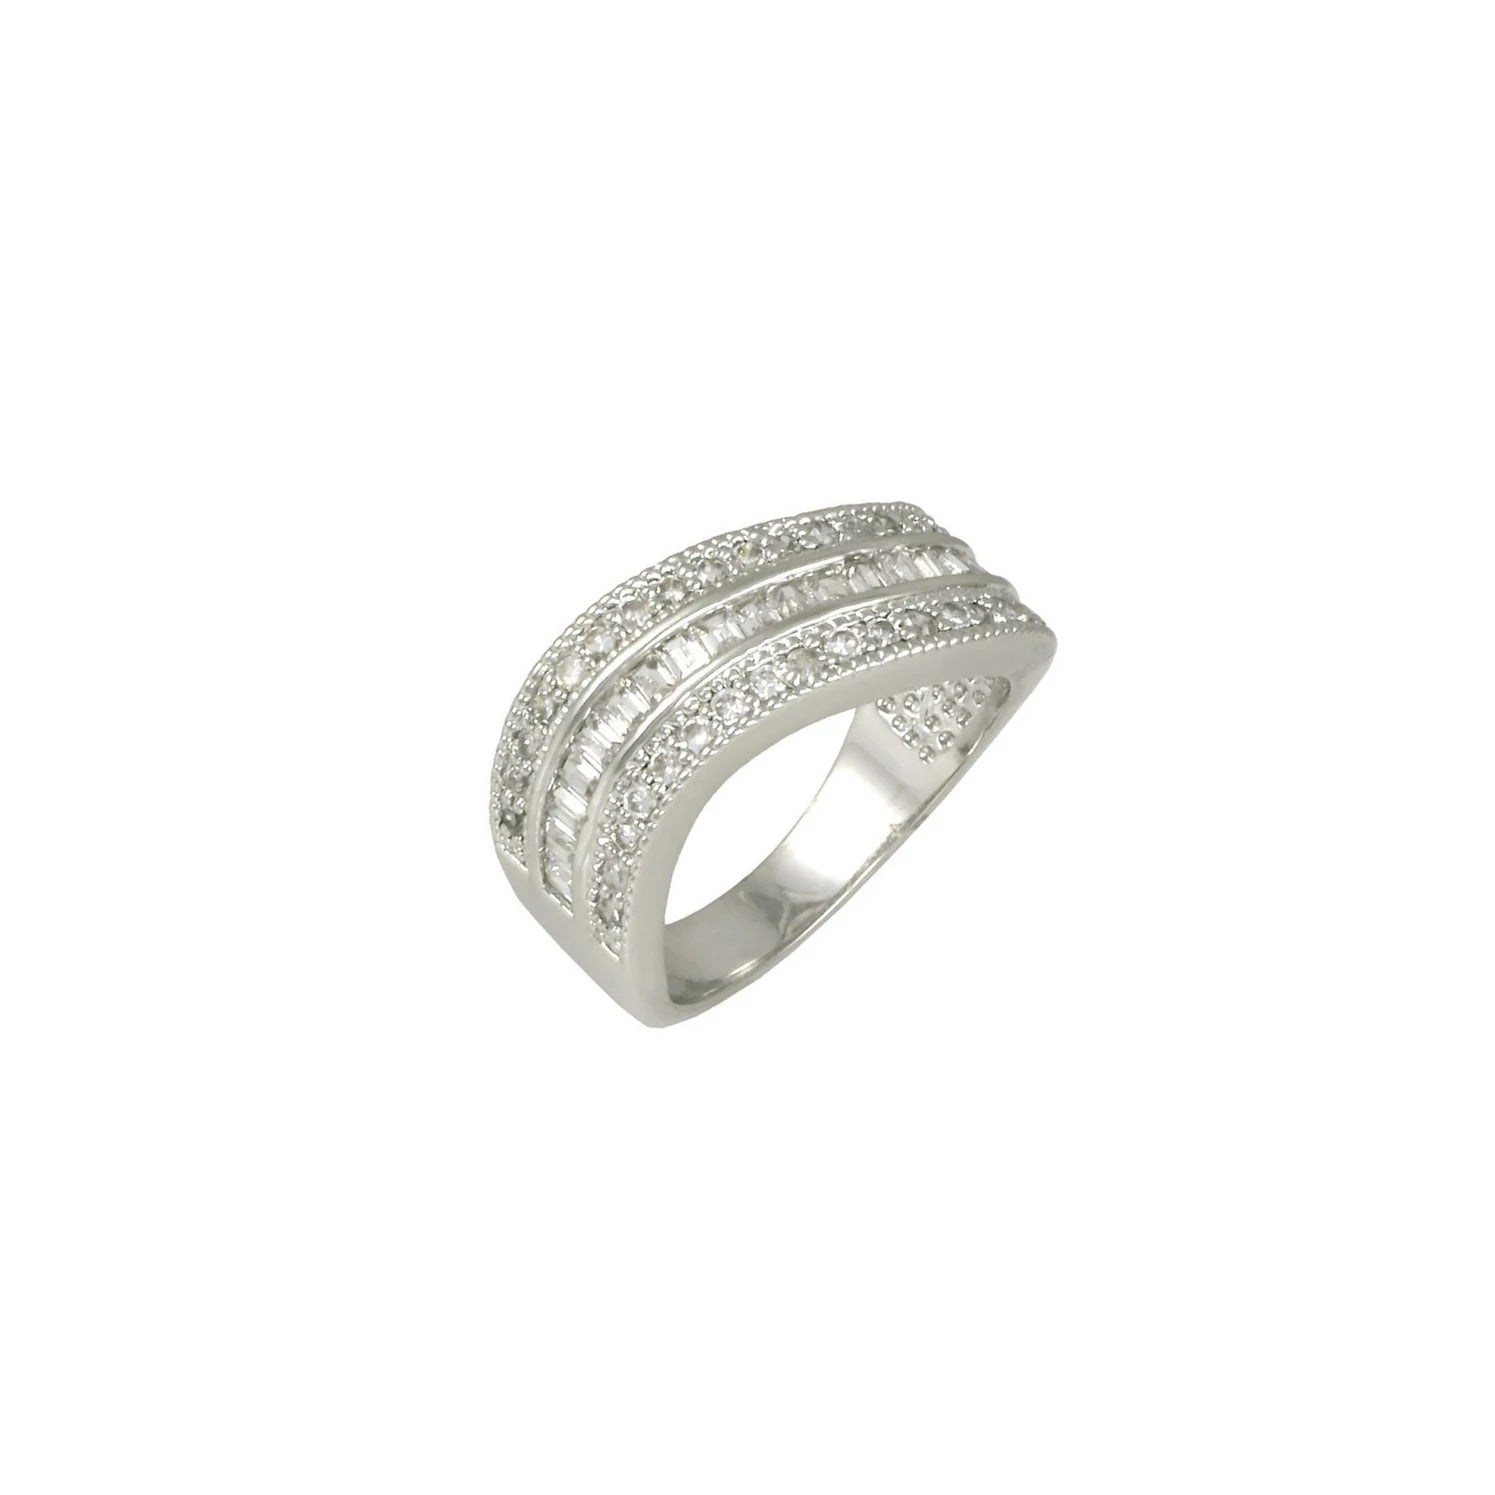 Shay 3-Row CZ Diamond Ring, Silver - Zahra Jewelry